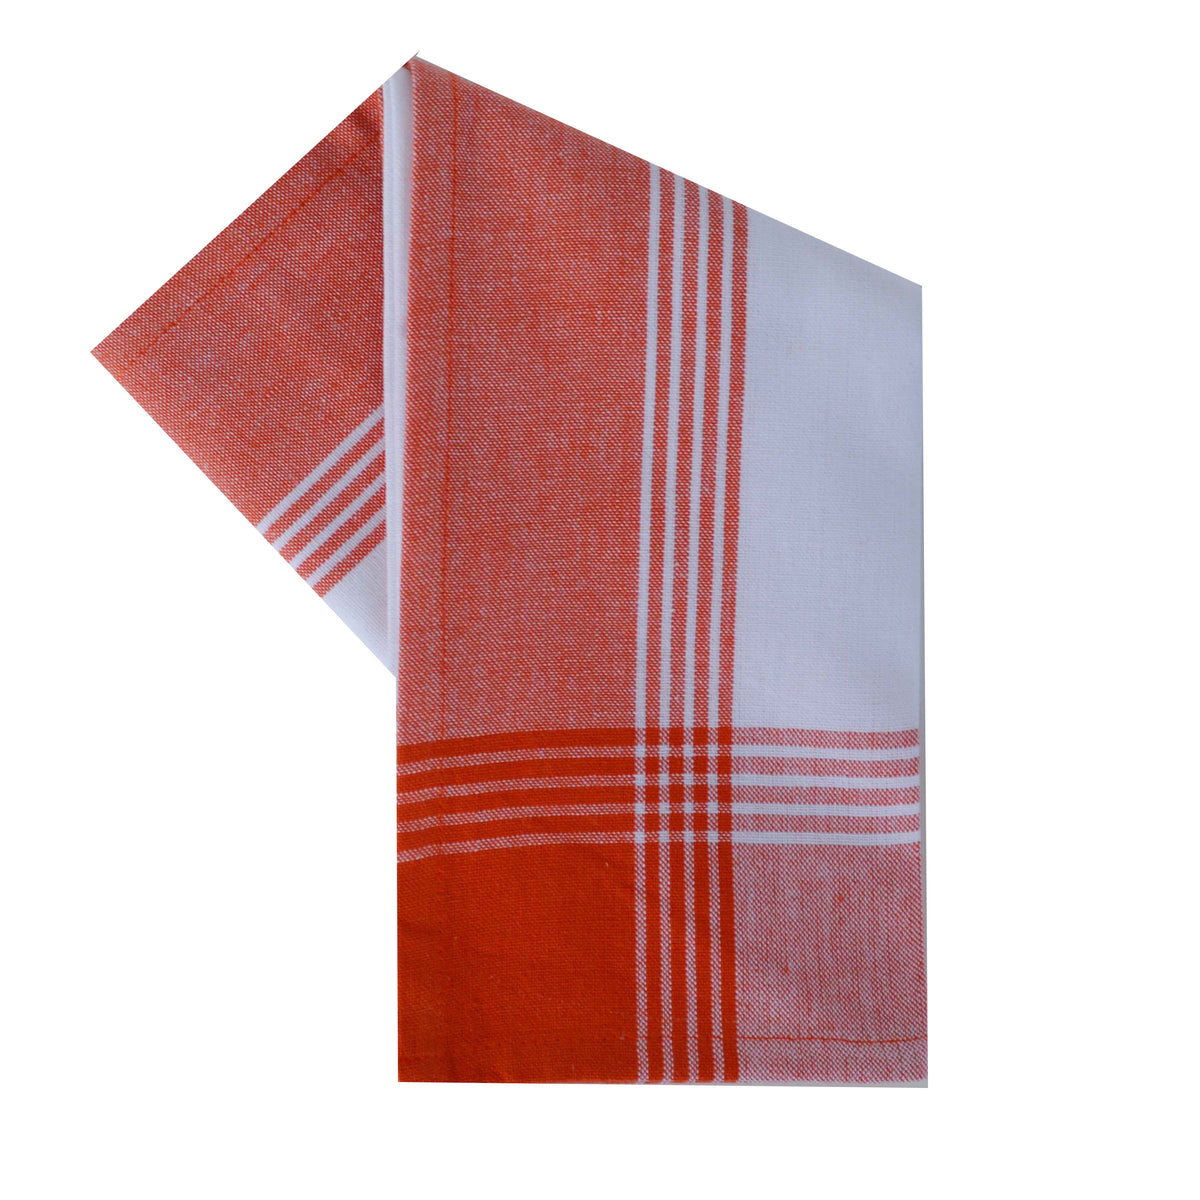 Variety Towel Set - Orange Set of 4